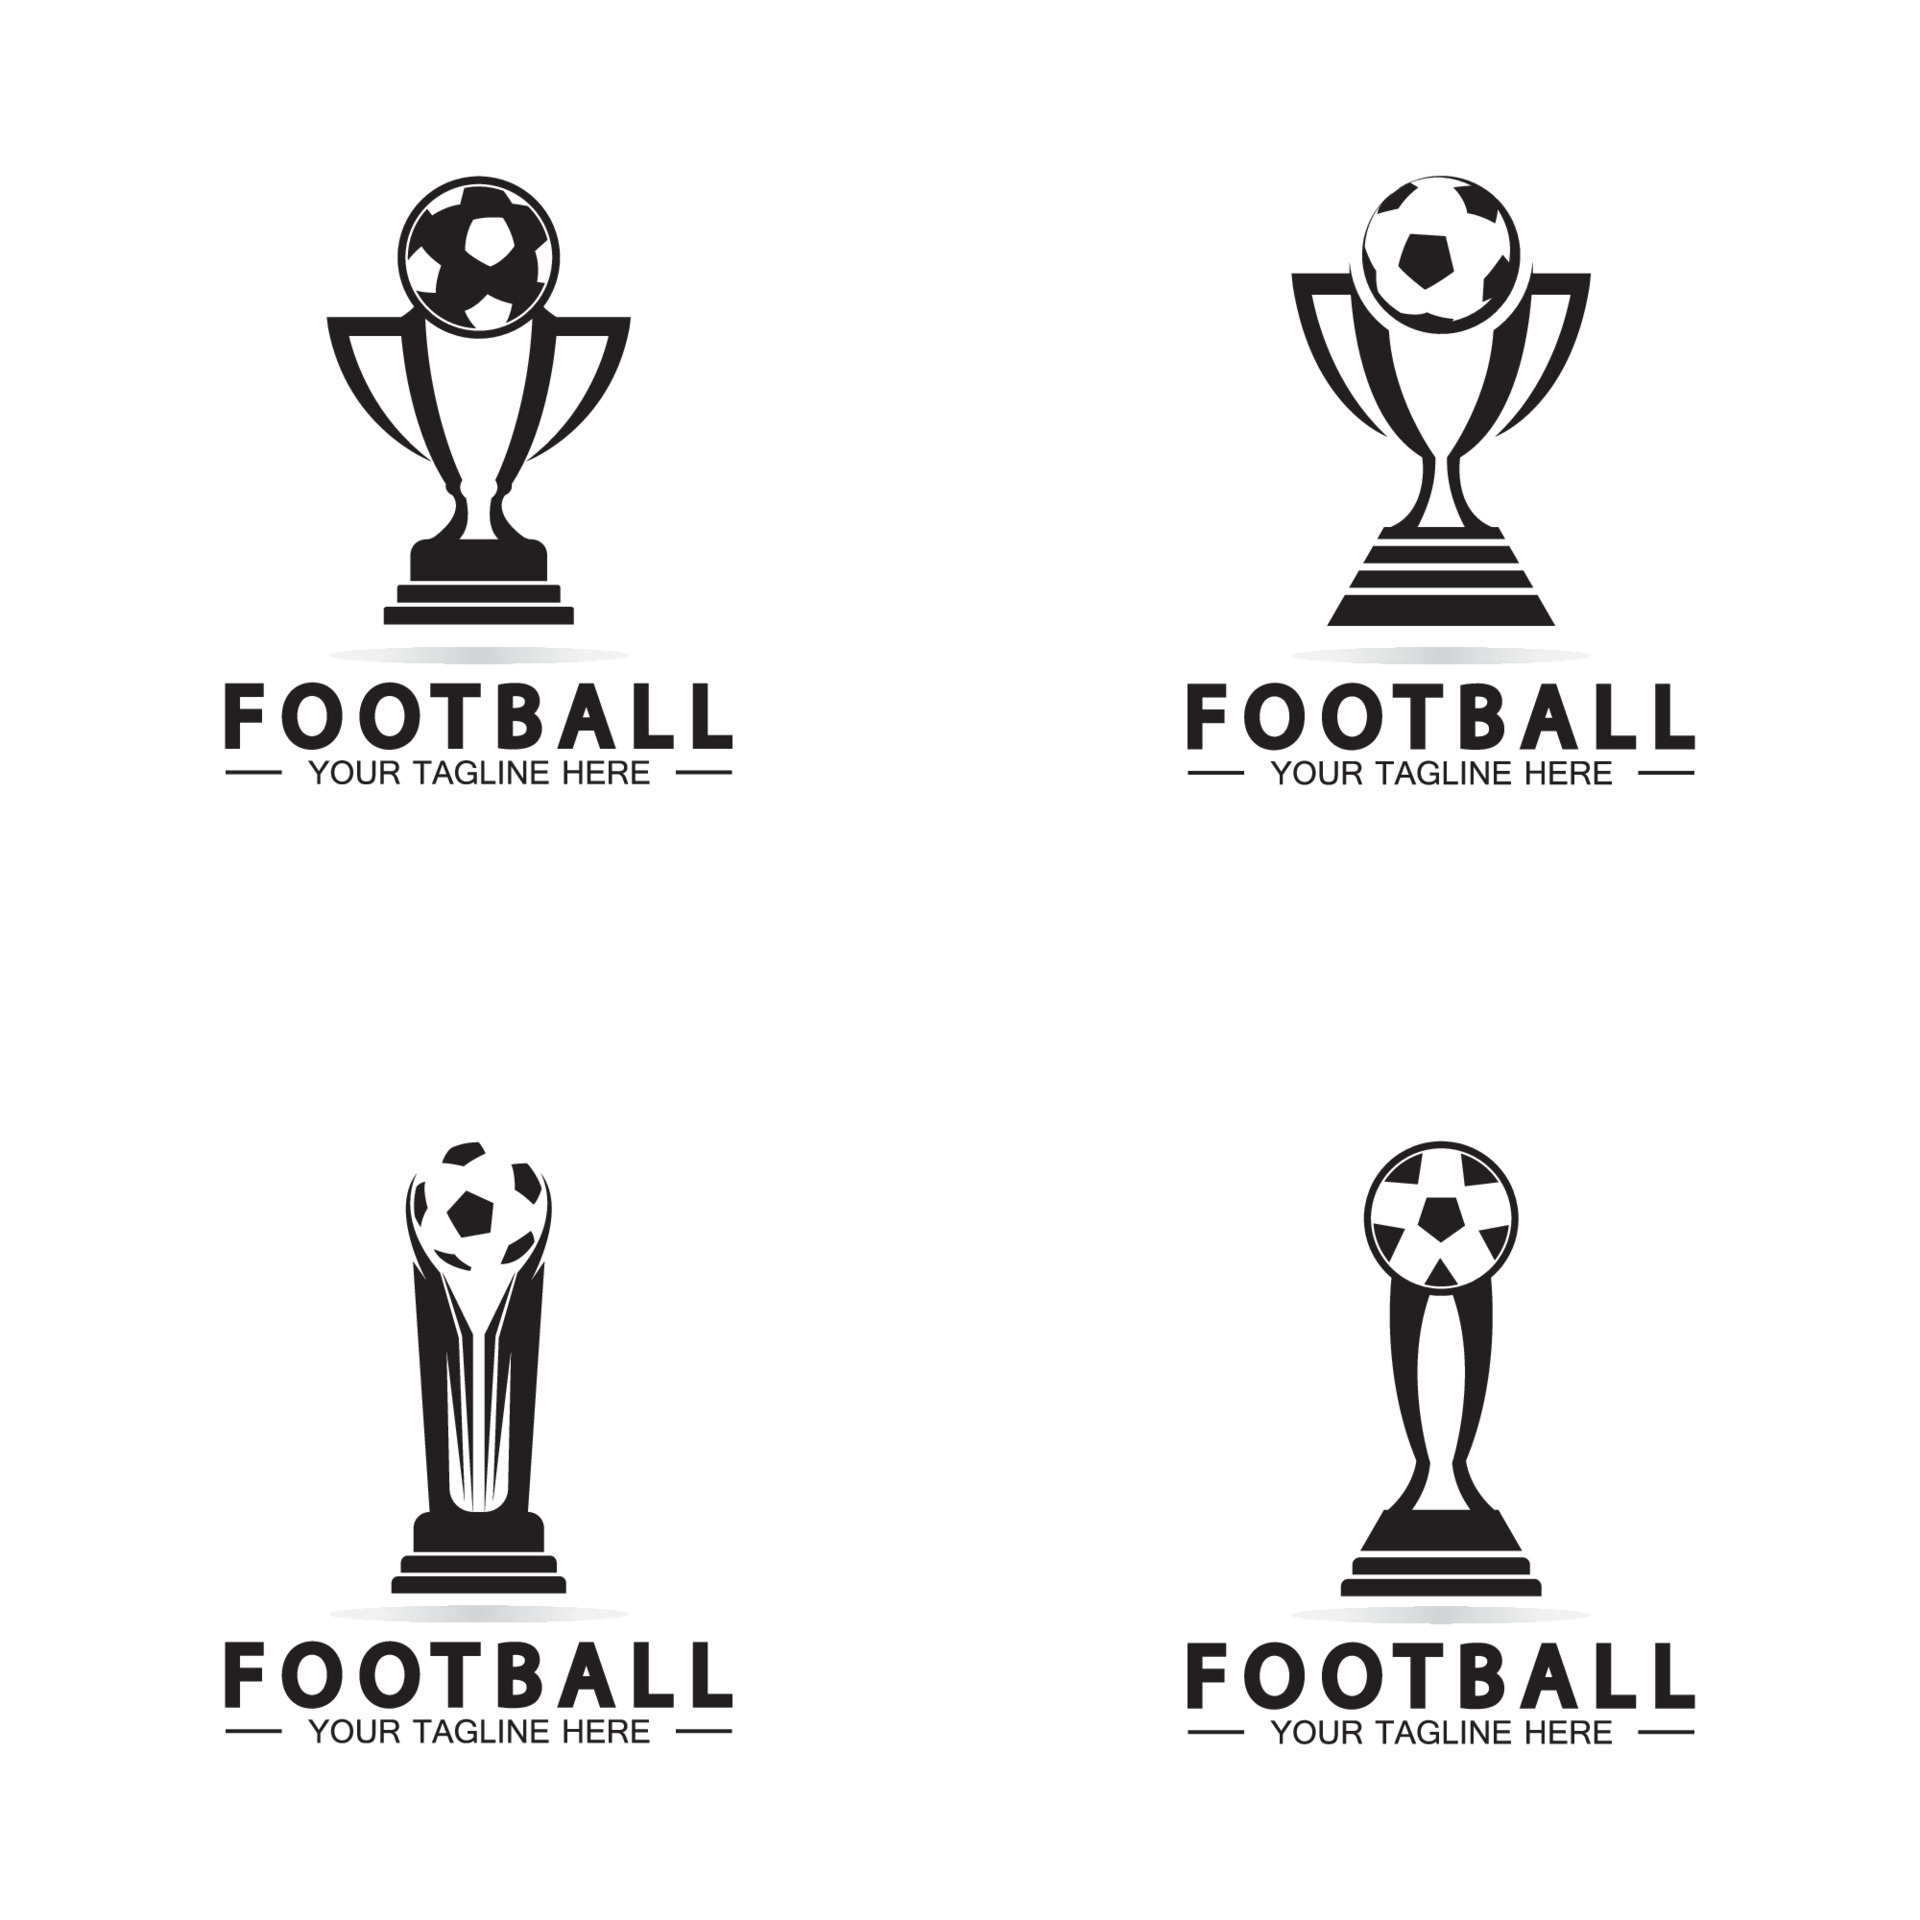 Premium Vector  Championship logo design template